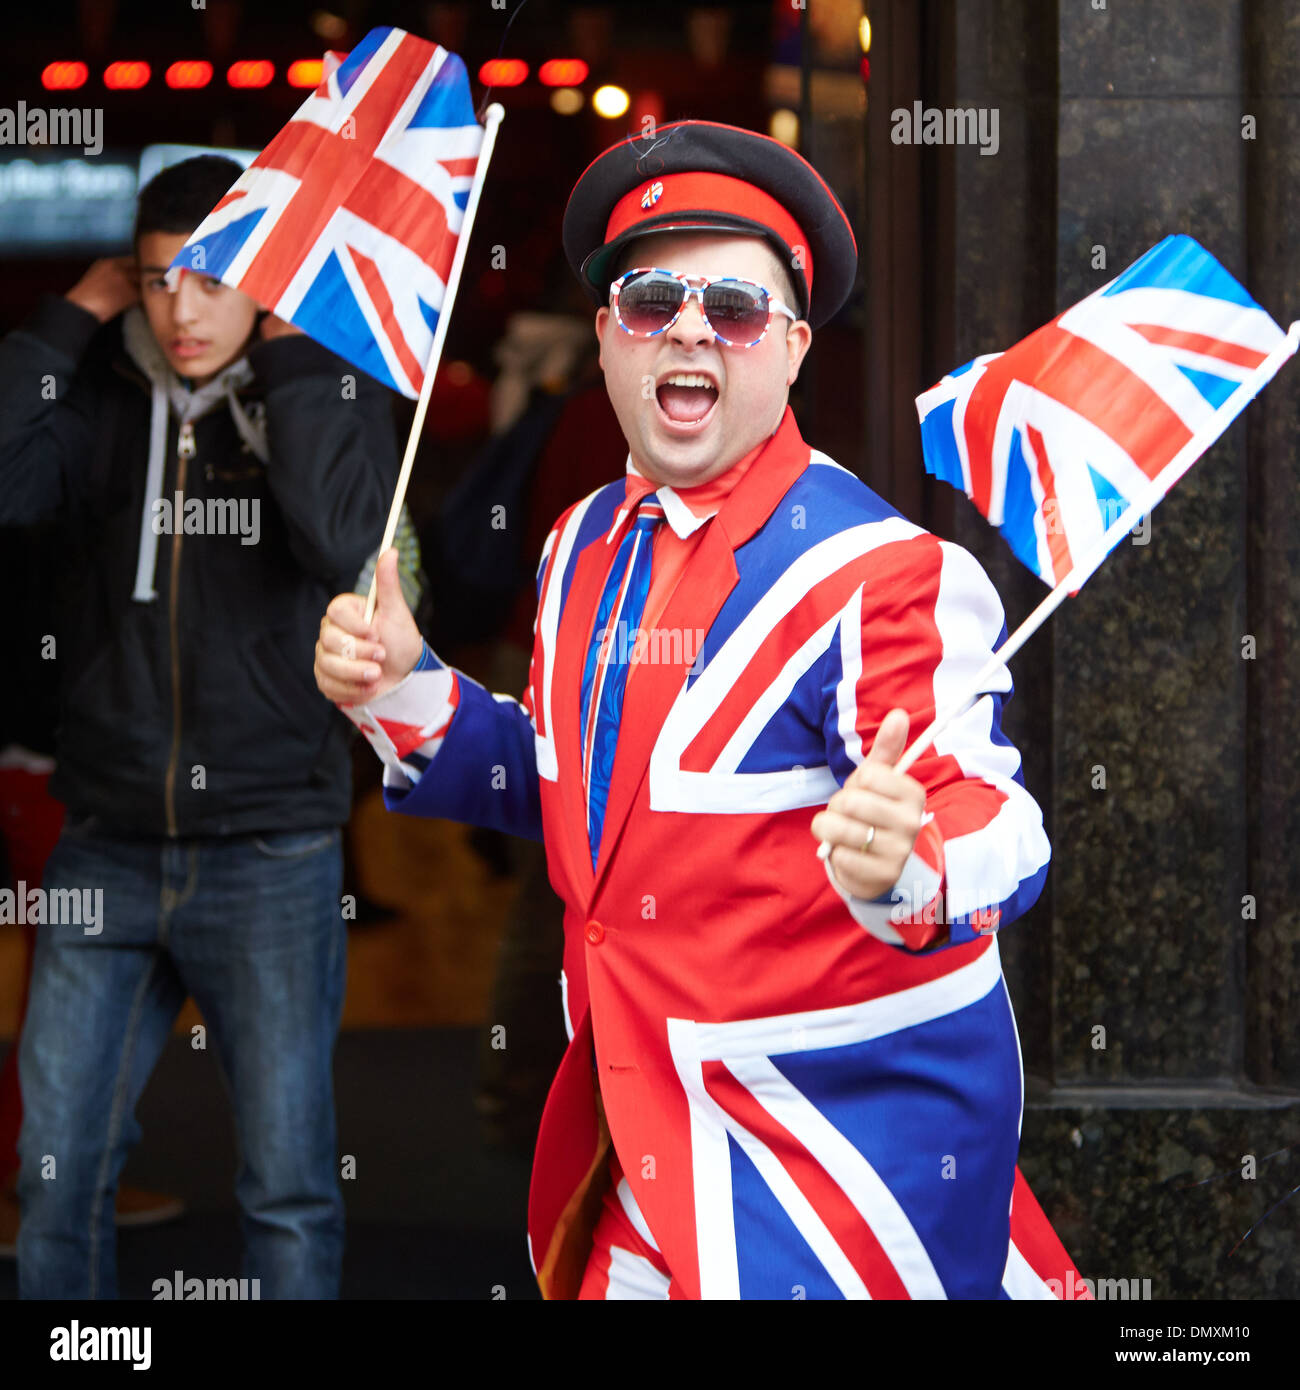 man-wearing-an-union-jack-suit-outside-a-tourist-shop-in-london-DMXM10.jpg